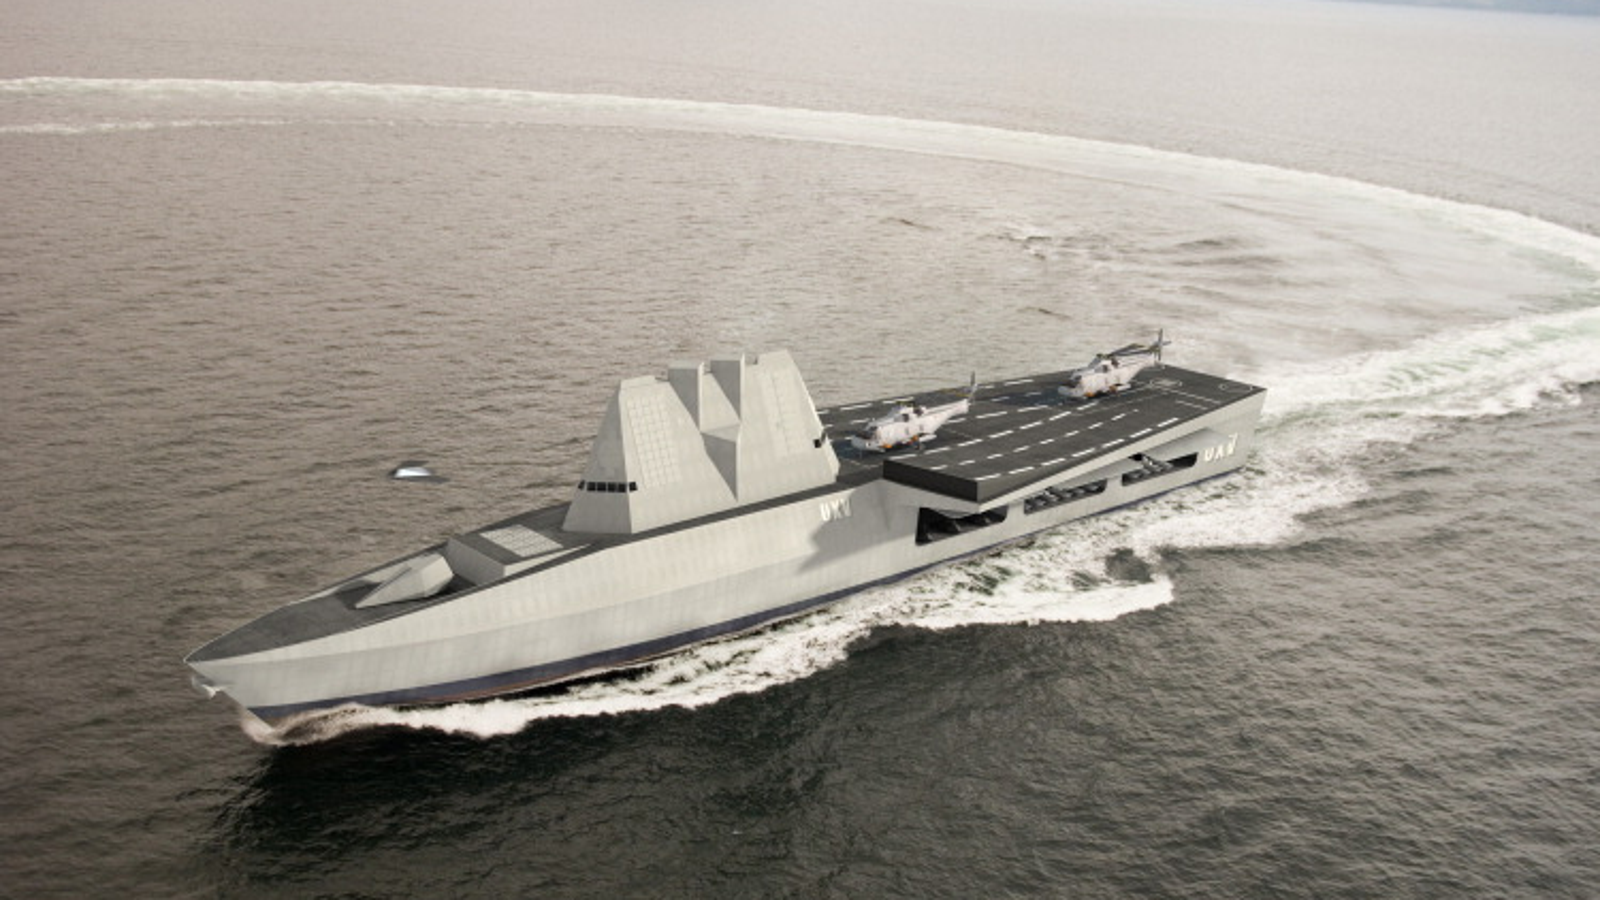 modern warships drone